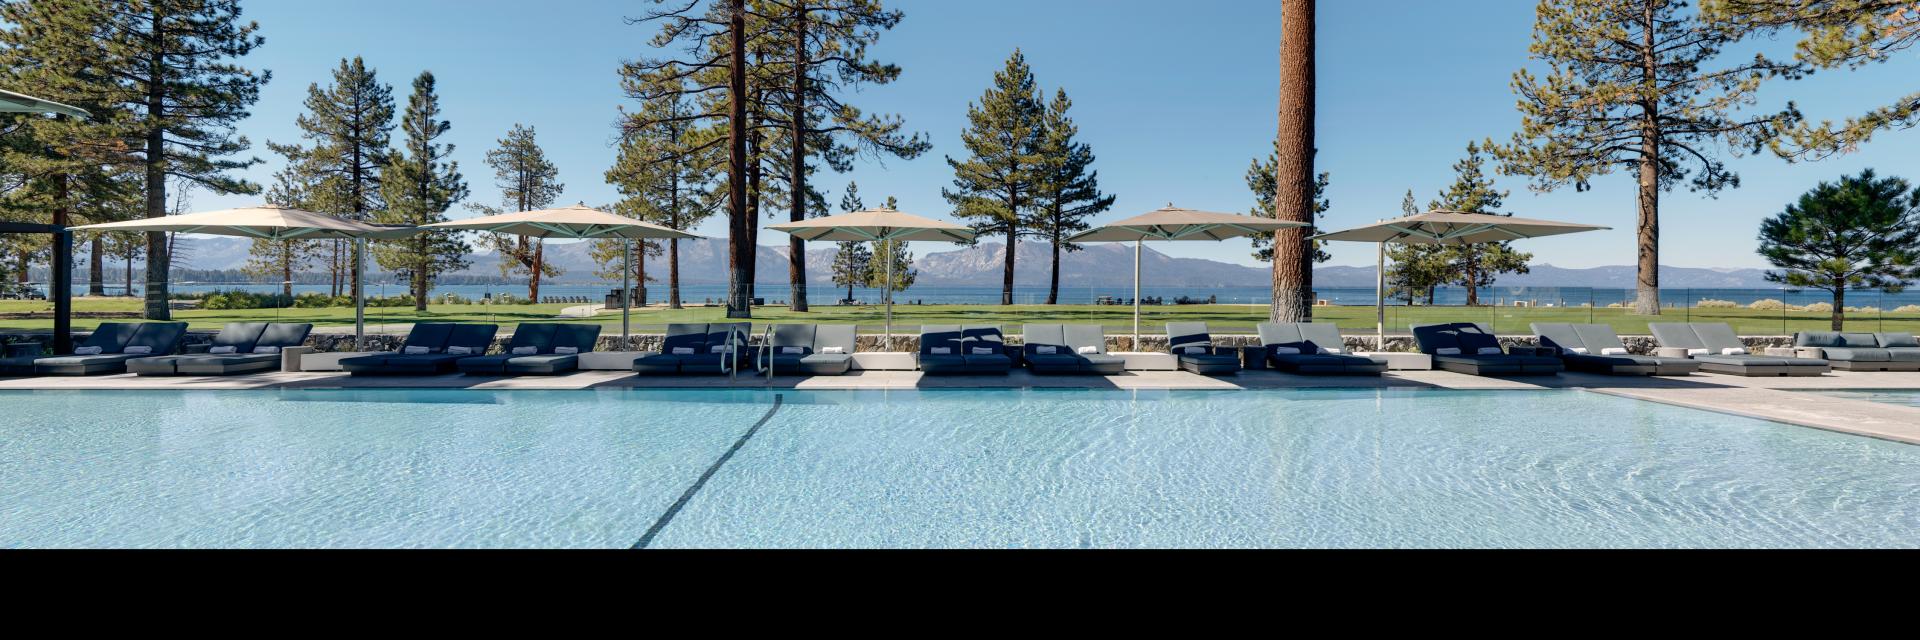 Edgewood Tahoe Resort Pool and Pine Trees